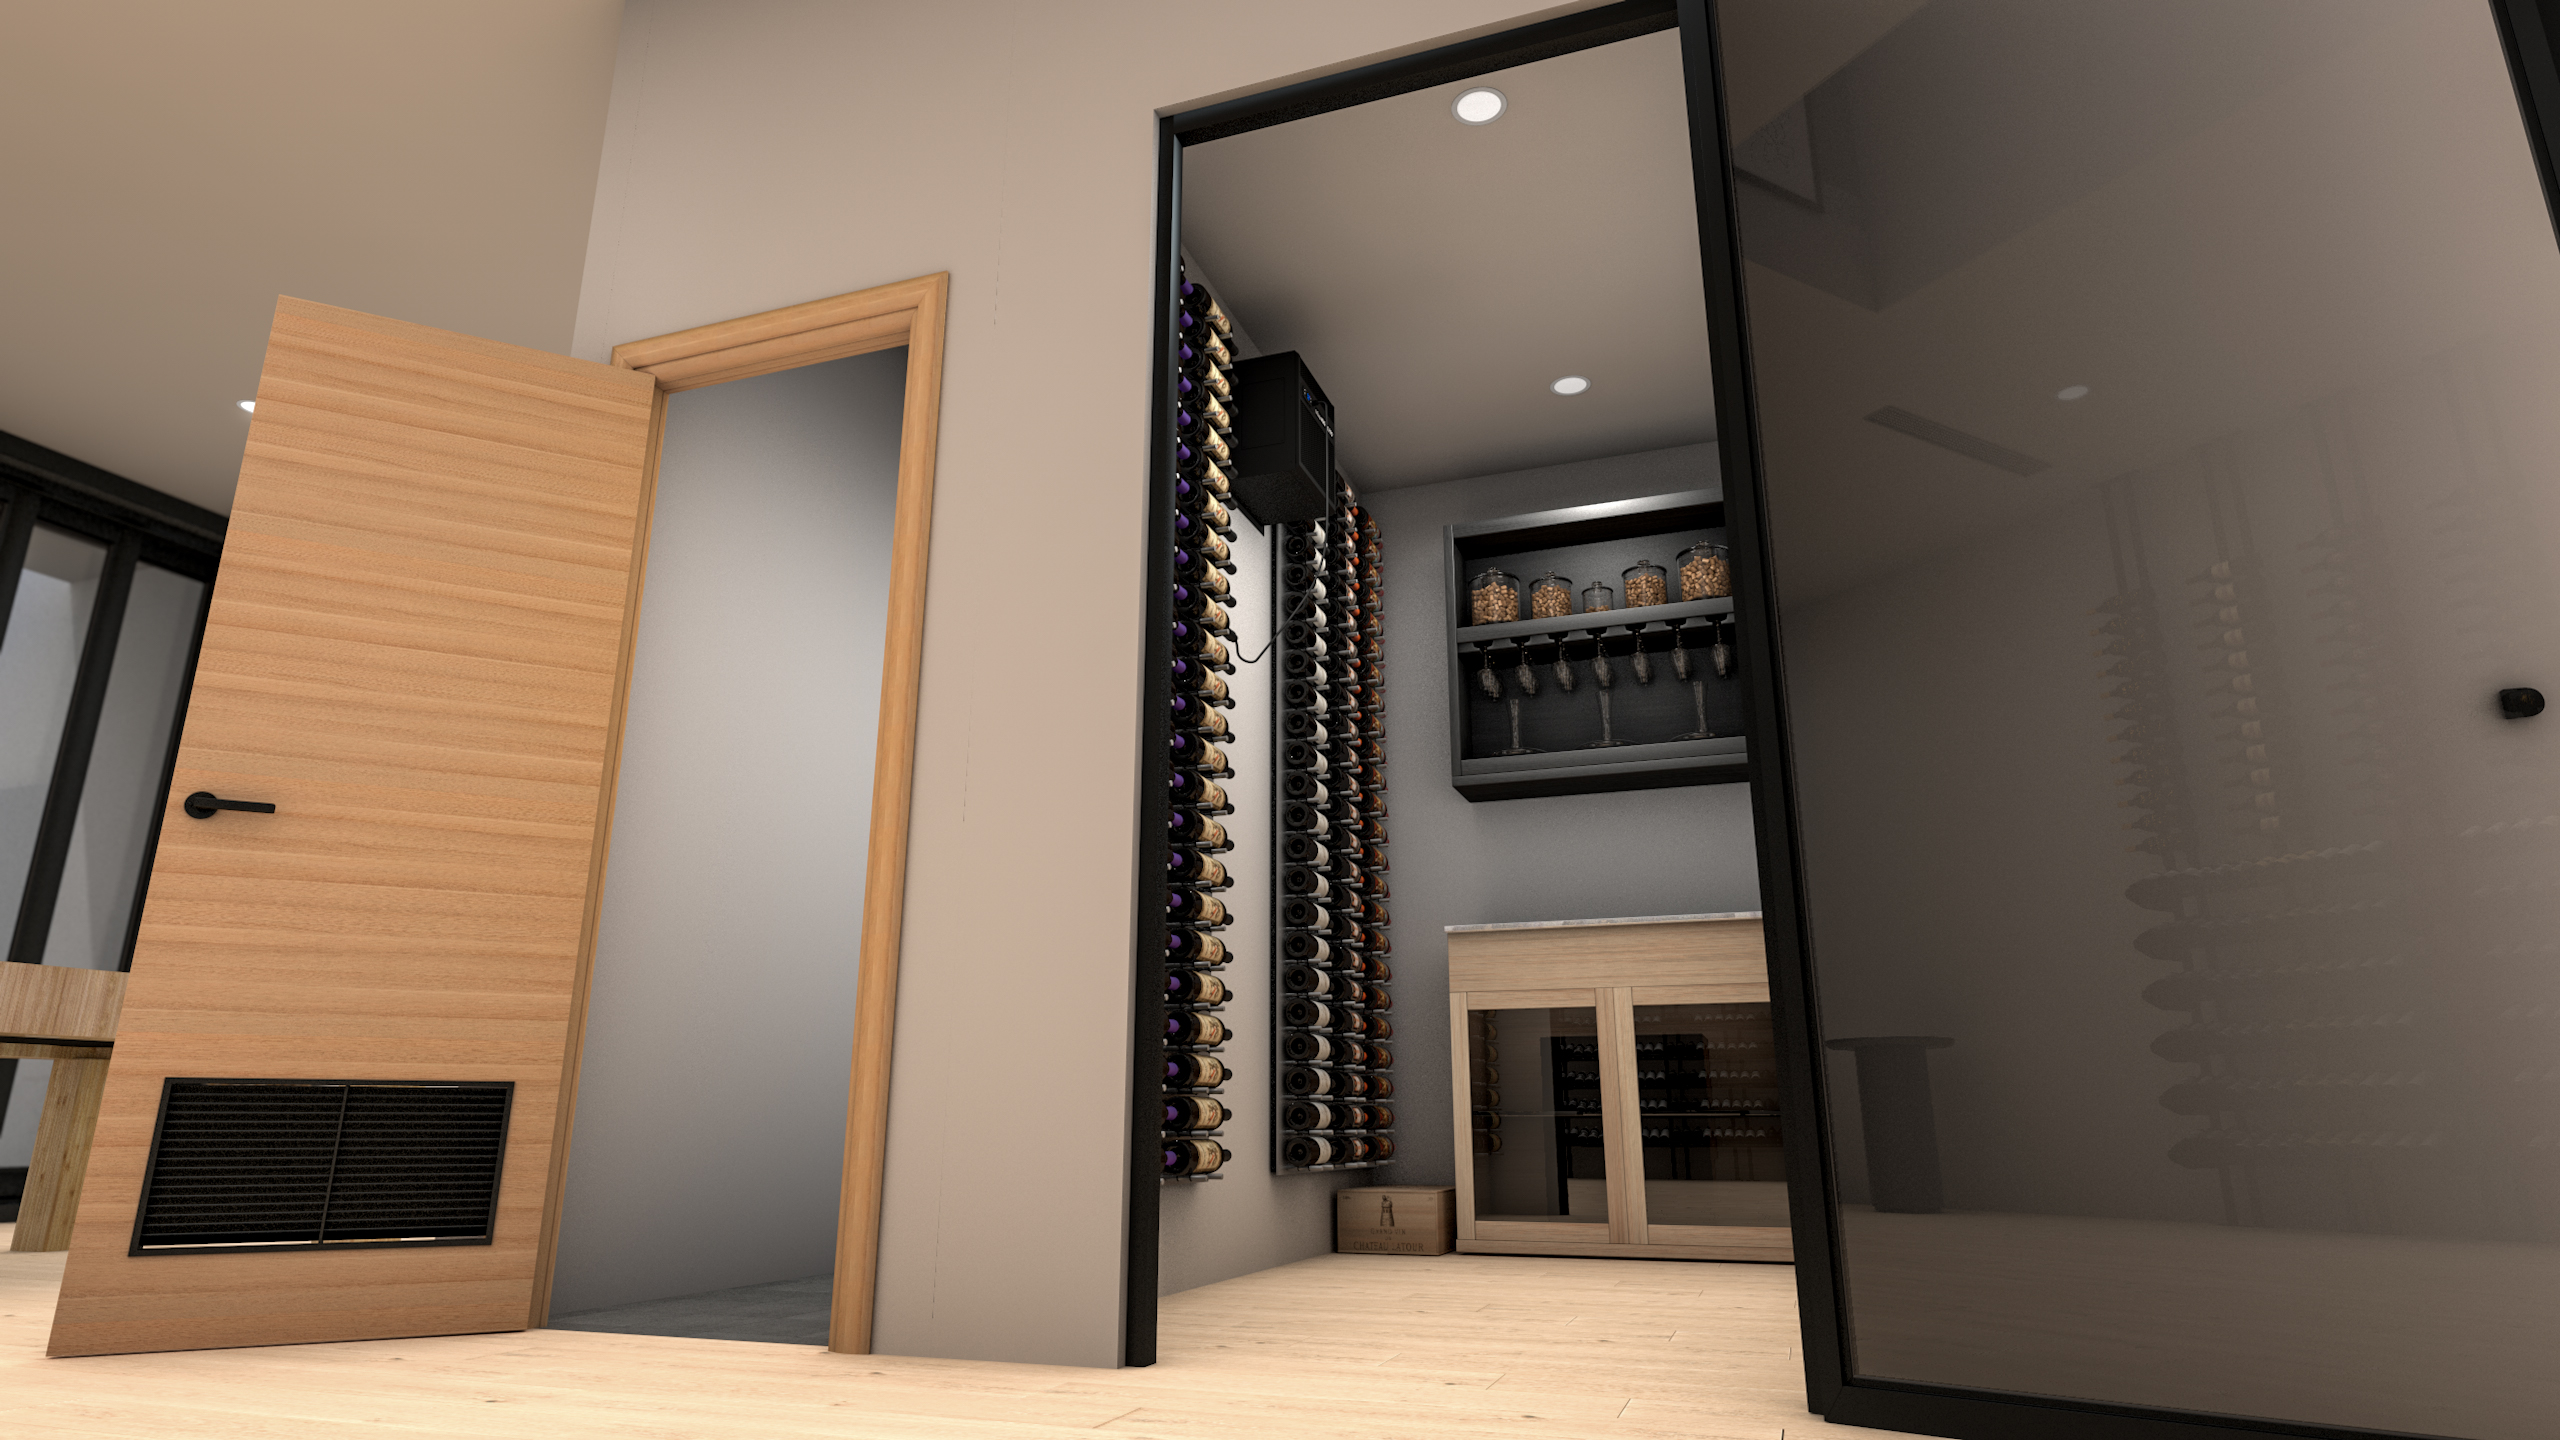 Ventilation in wine cellar: Conditioned space